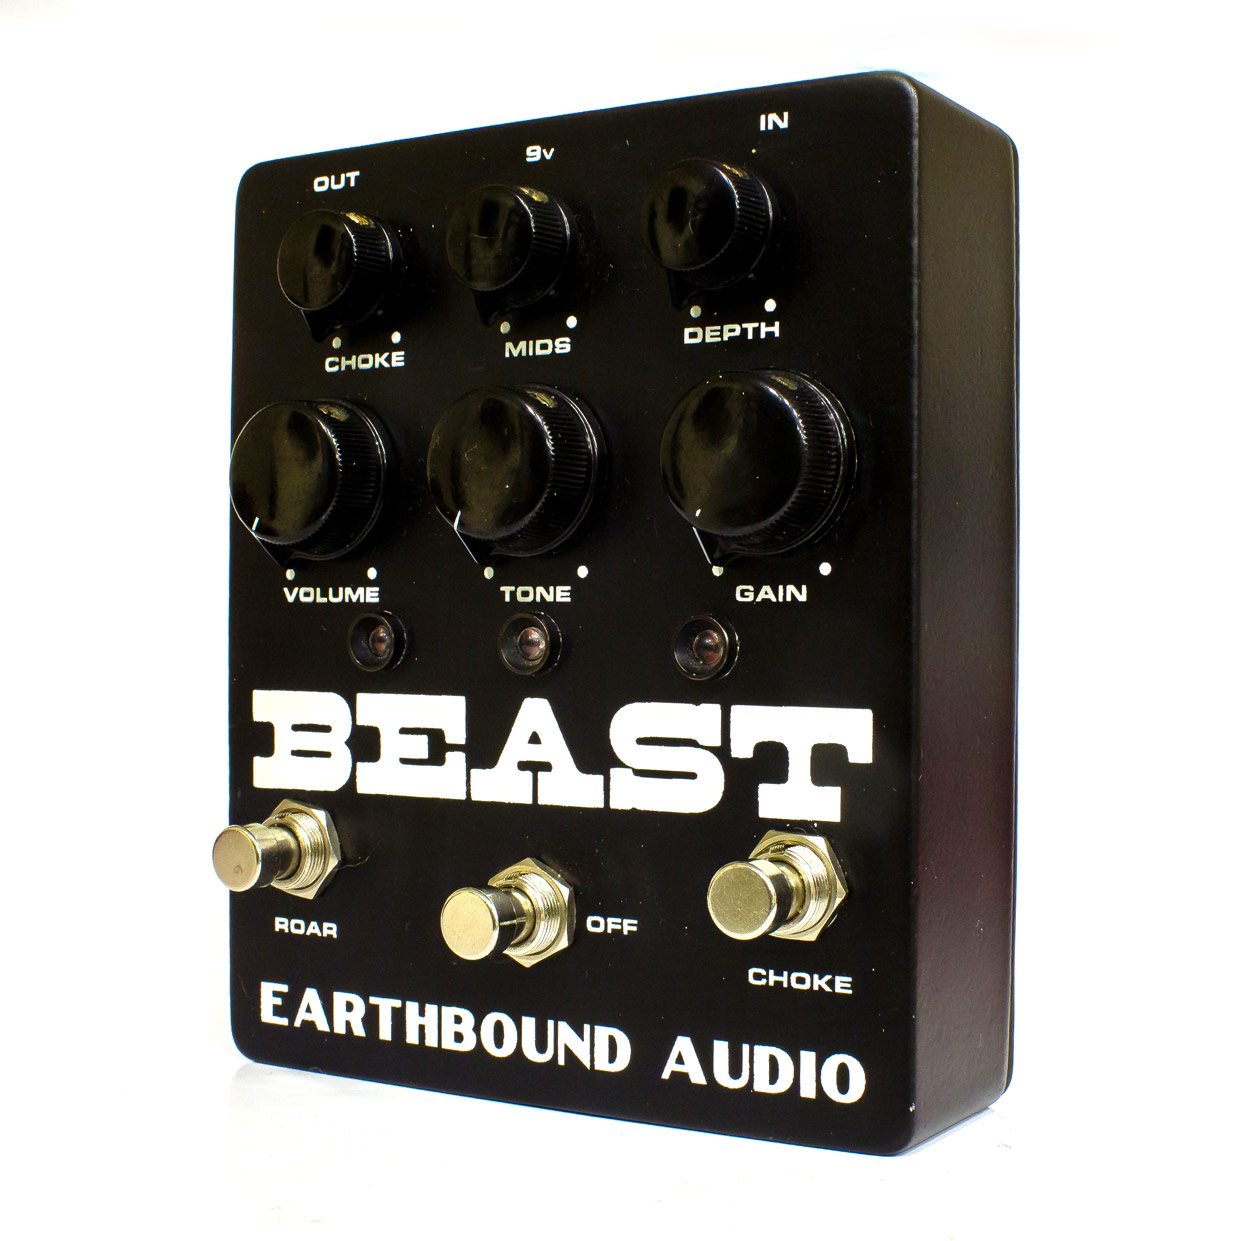 Beast (audio)